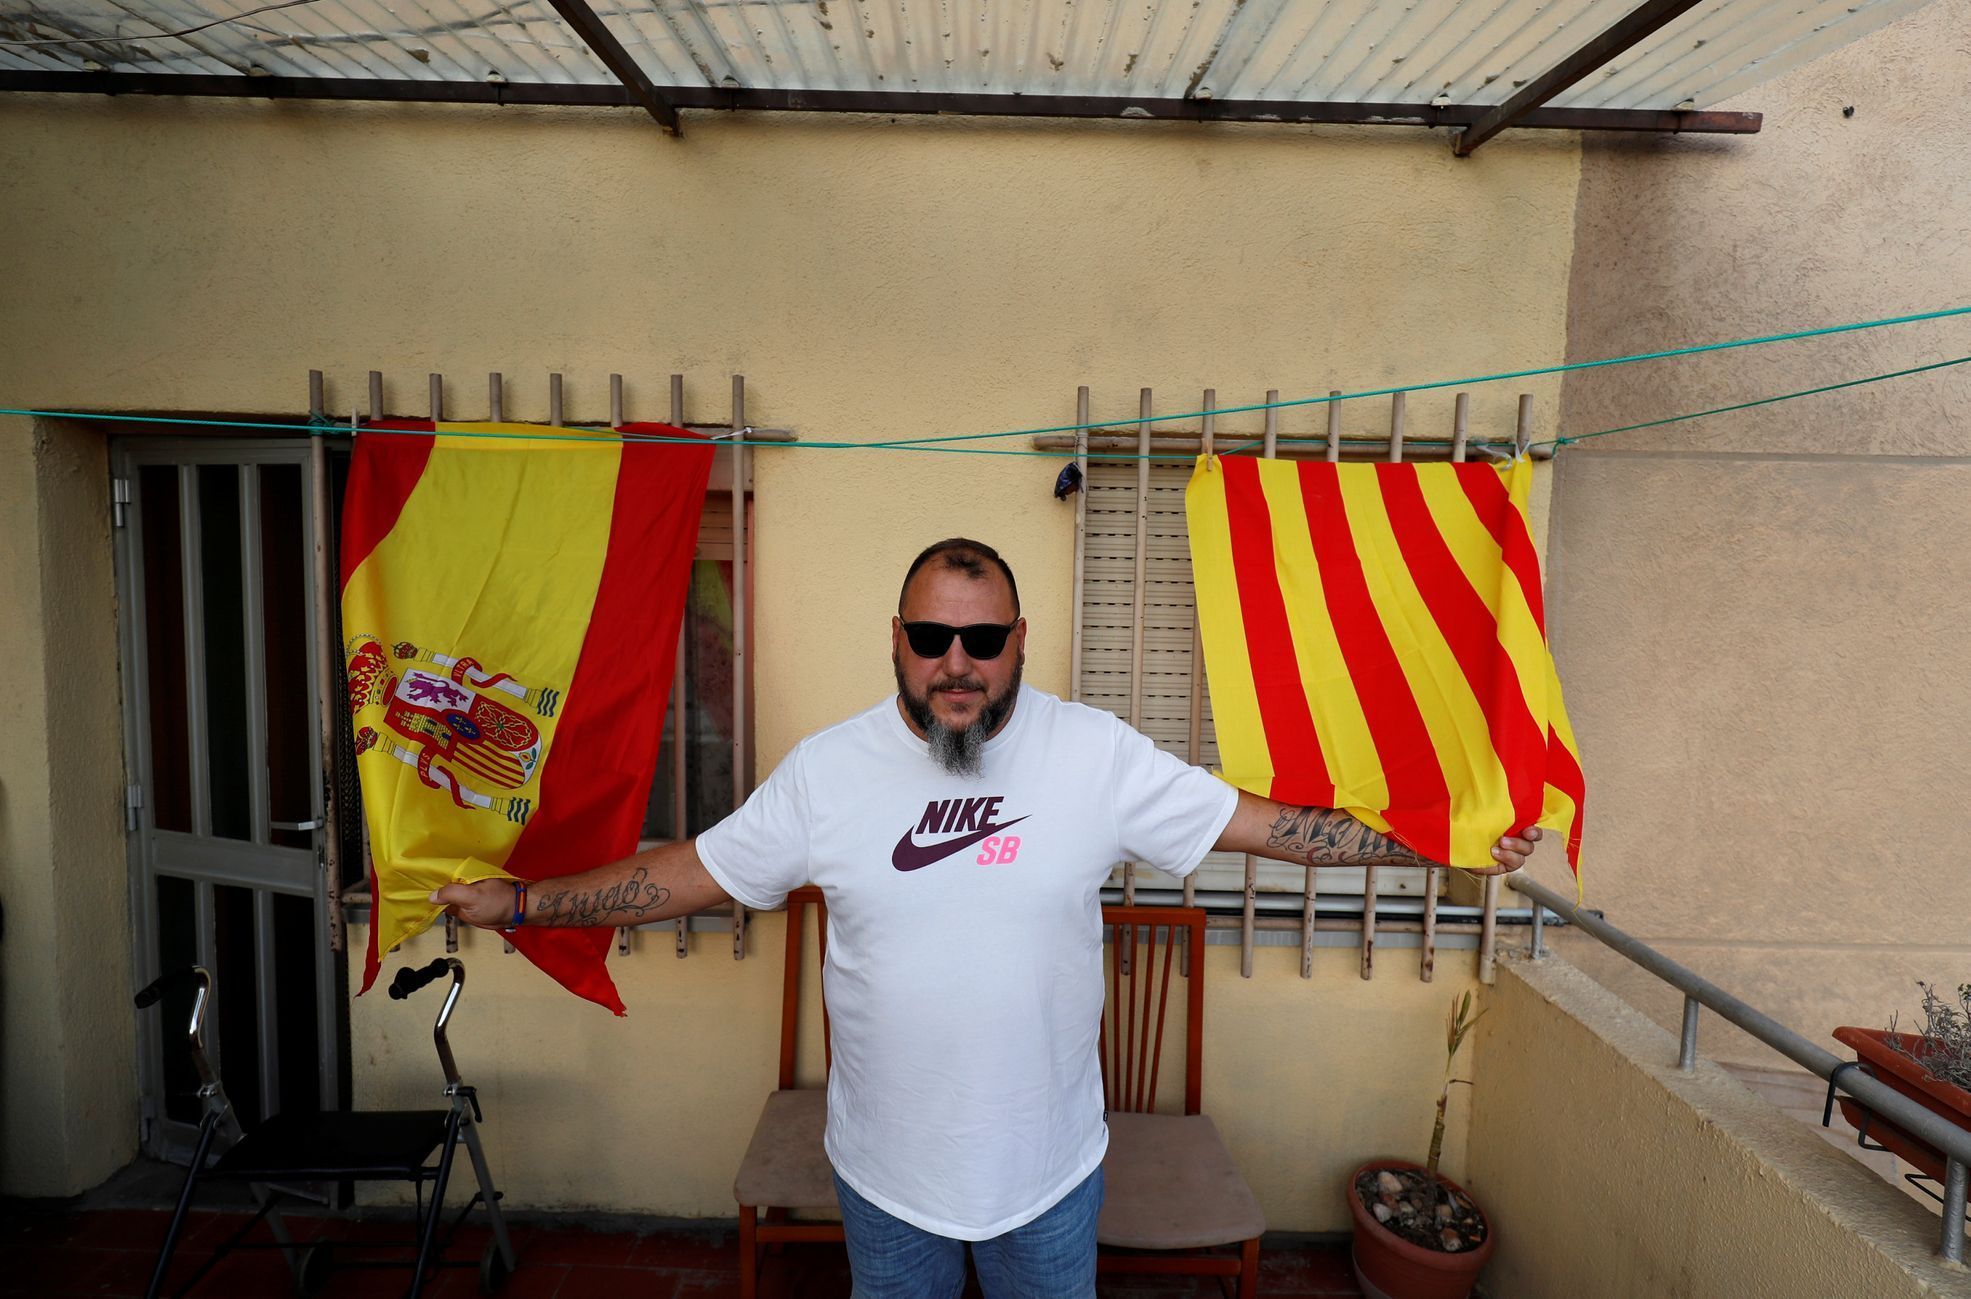 Ruben Sole z obce Badia del Valles odmítá nezávislé Katalánsko.